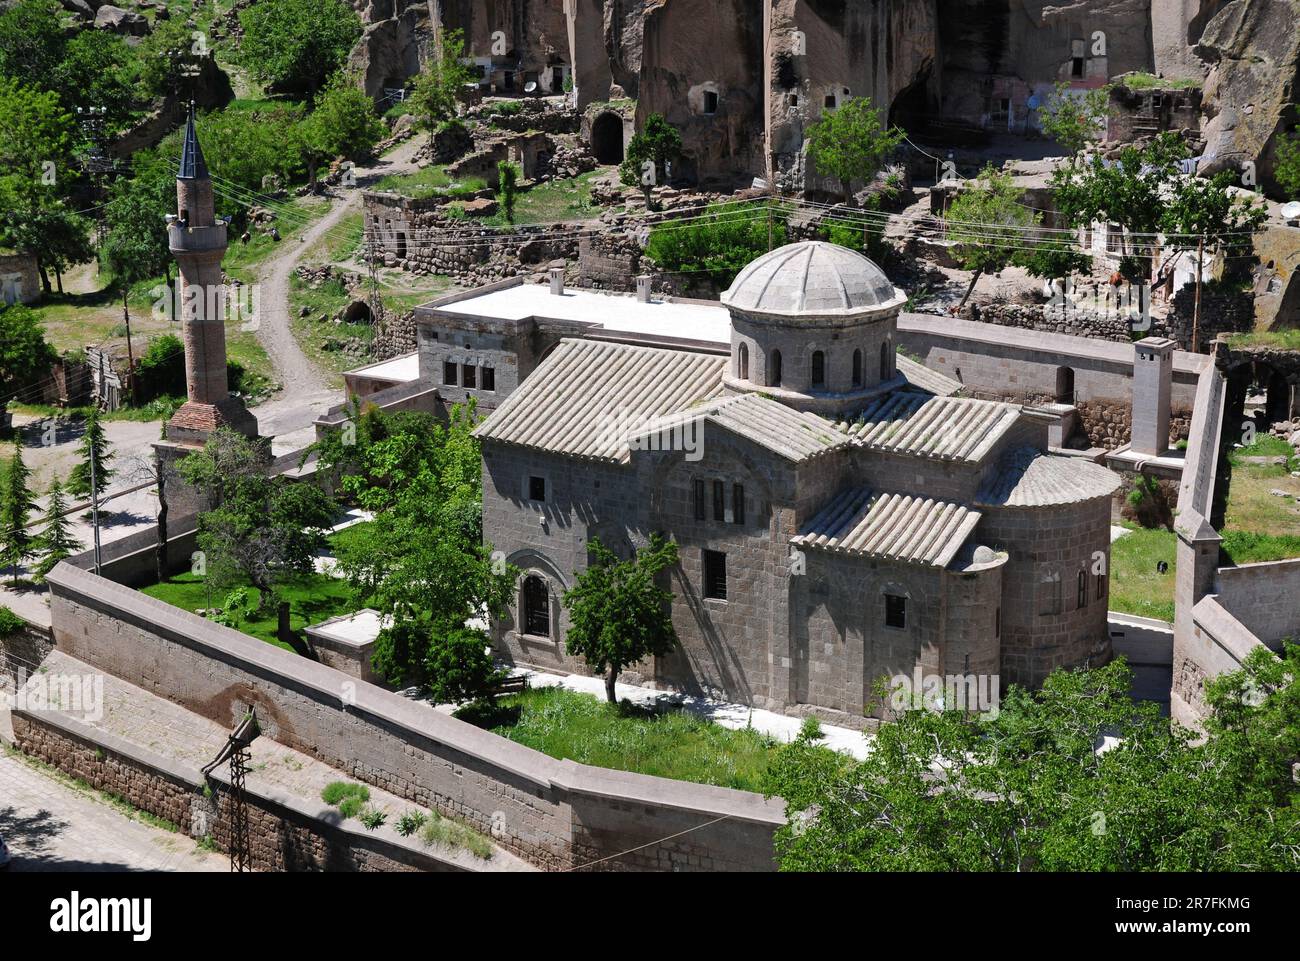 This stunning architectural landmark is located in Aksaray, Turkey Stock Photo